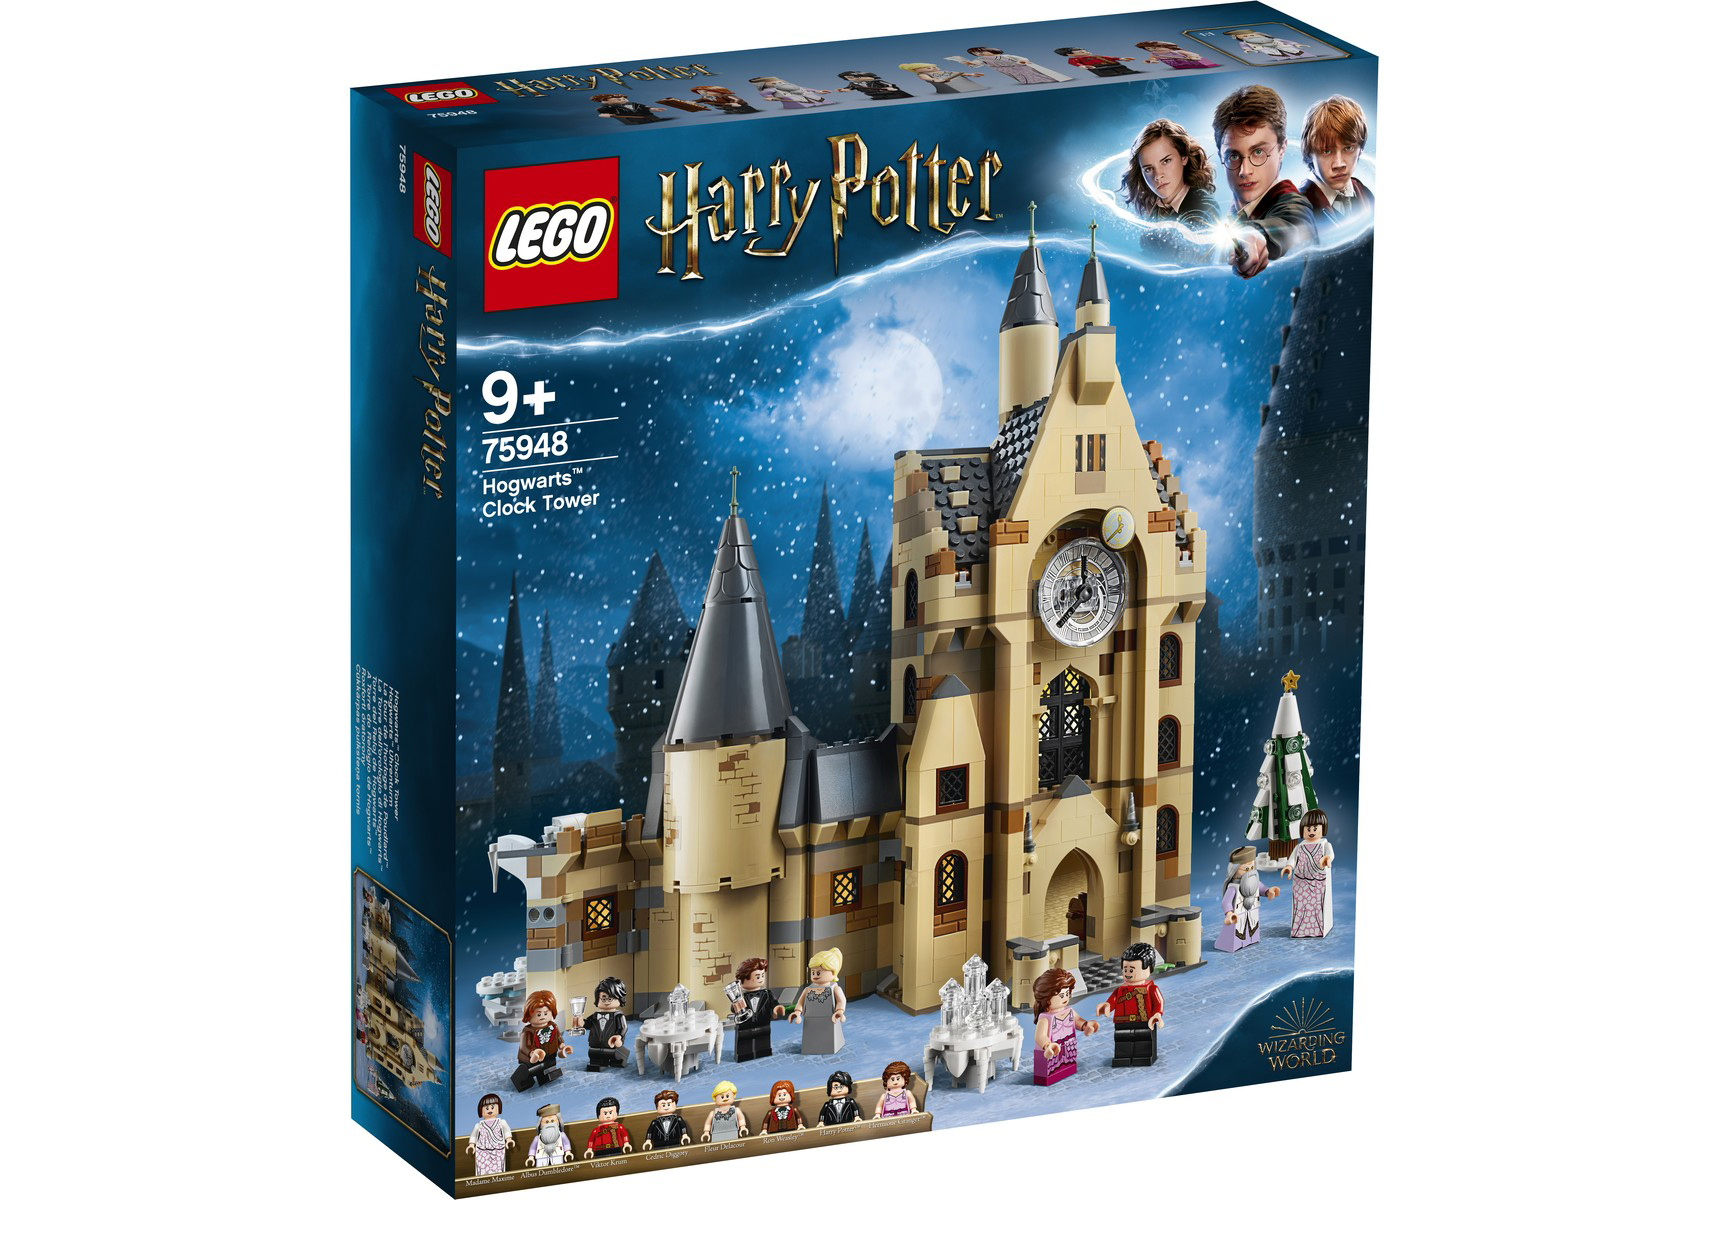 LEGO Harry Potter Hogwarts Clock Tower Set 75948 - US